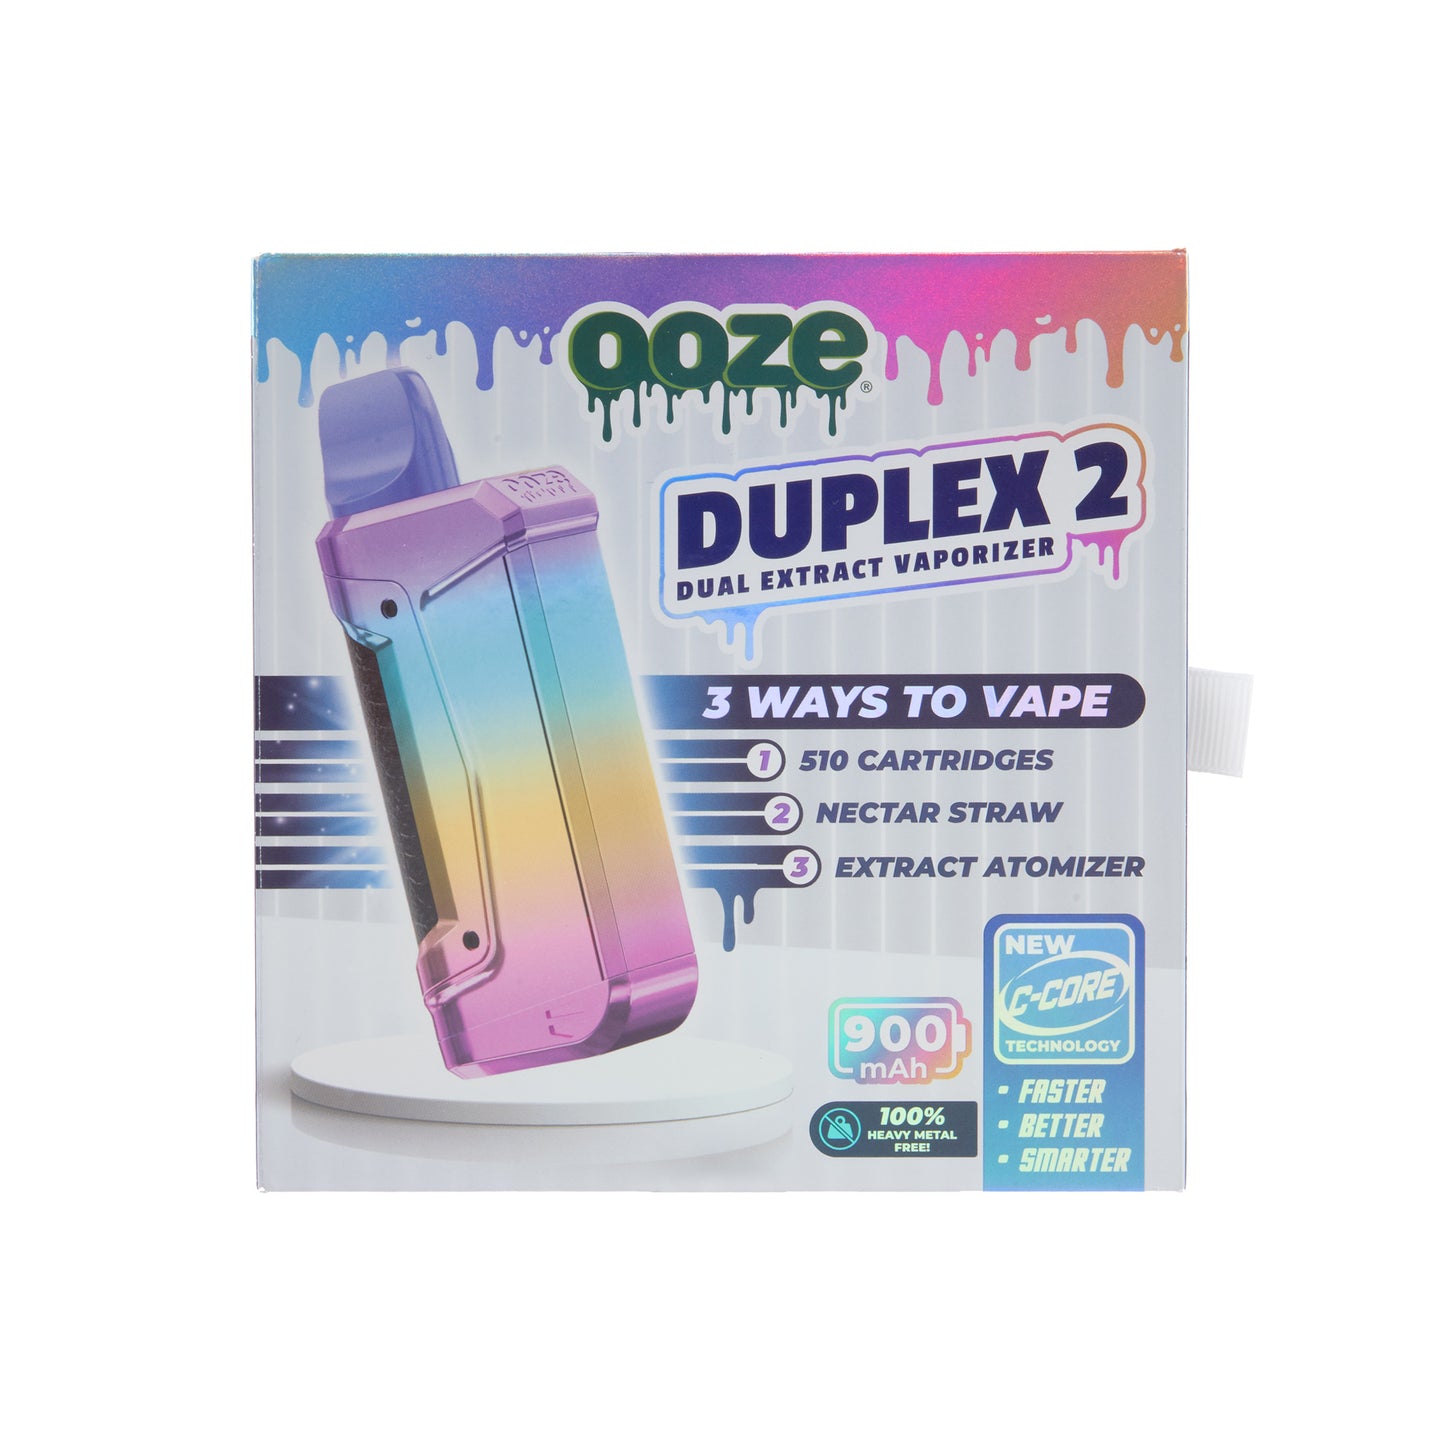 The box for The rainbow Ooze Duplex 2 extract vape